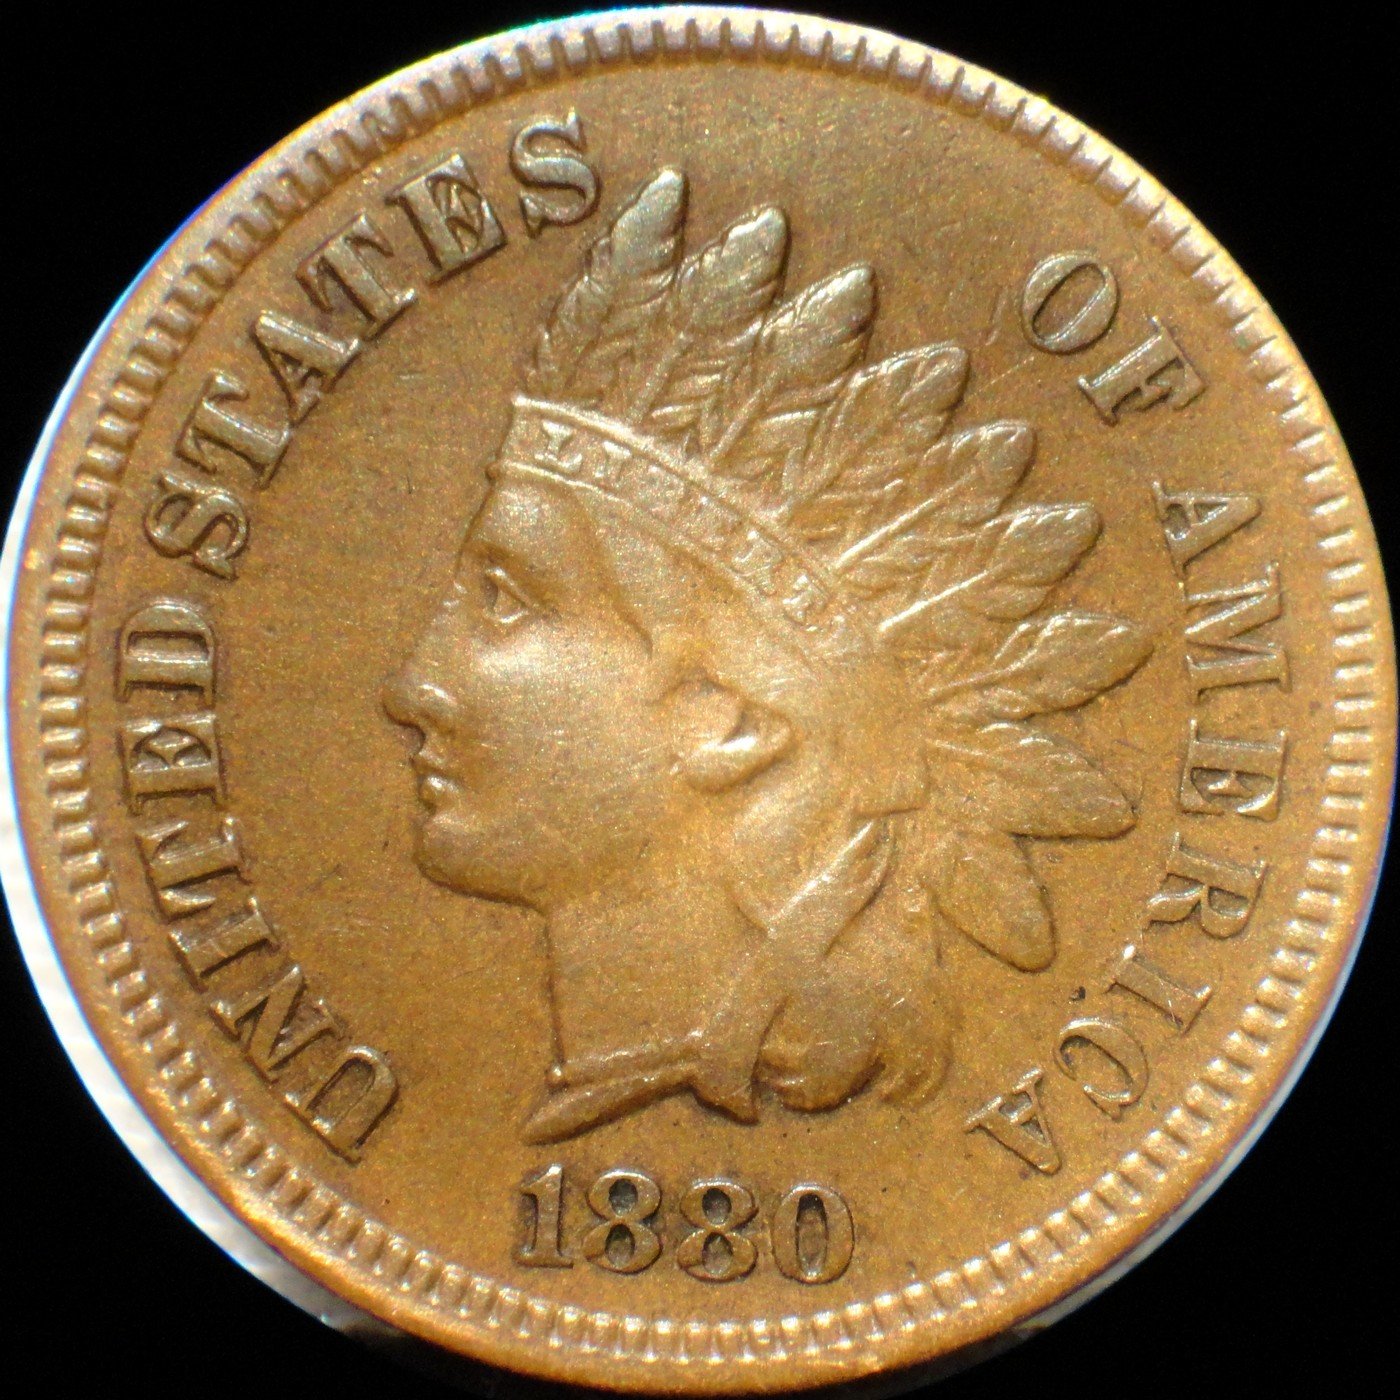 1880 PUN-008 Indian Head Penny